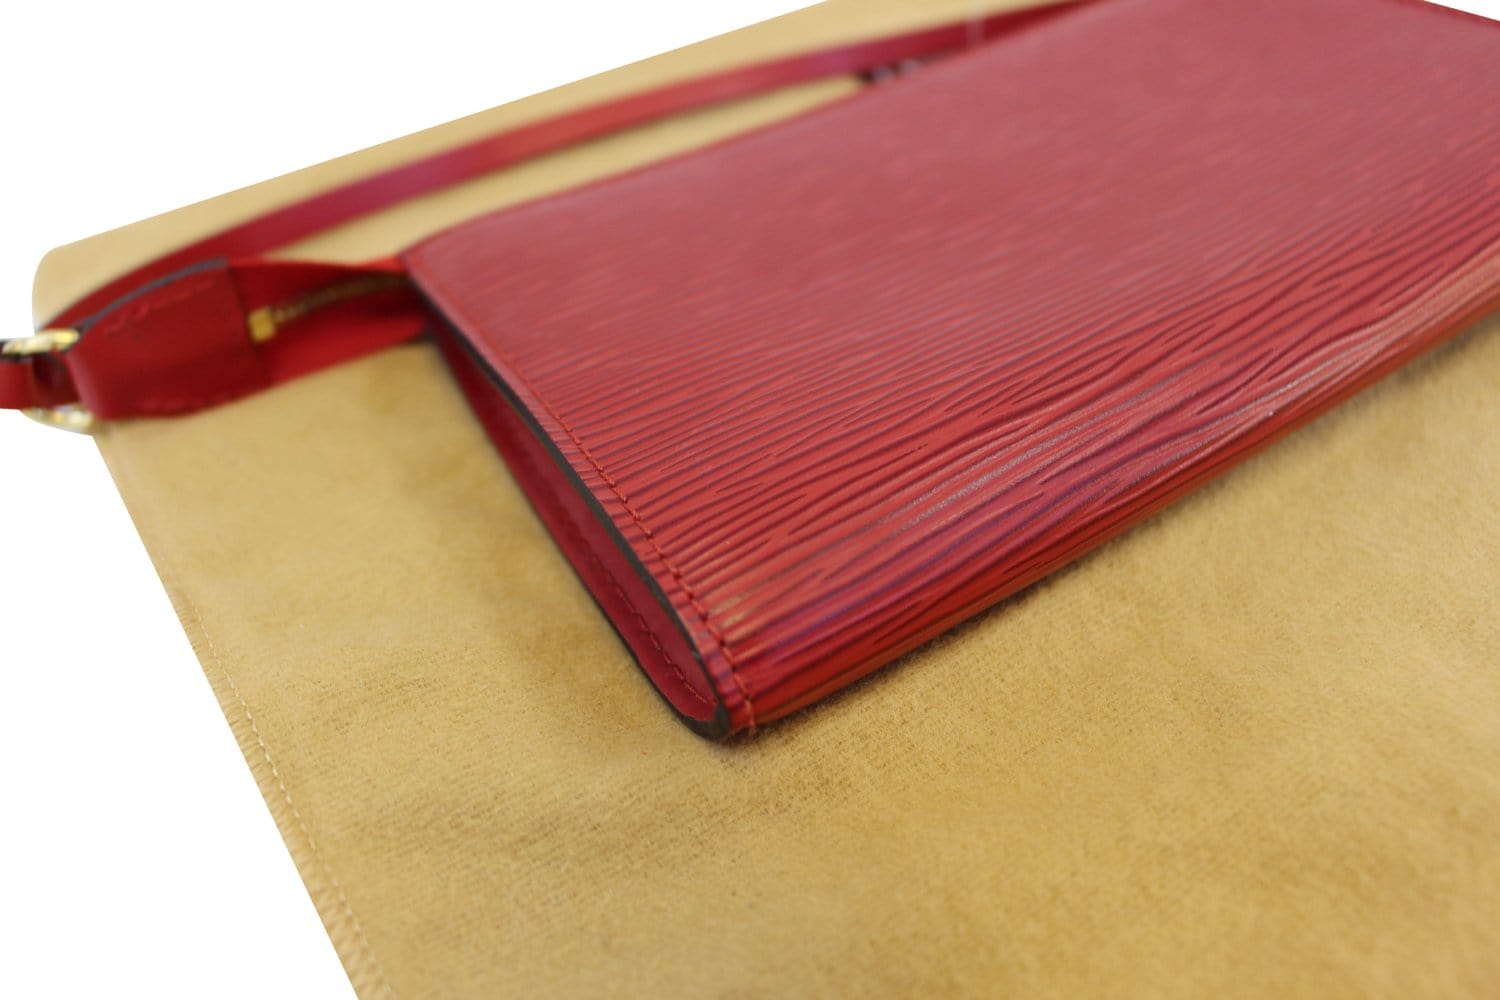 Louis Vuitton Red Epi Leather Pochette Bag.  Luxury Accessories, Lot  #17030